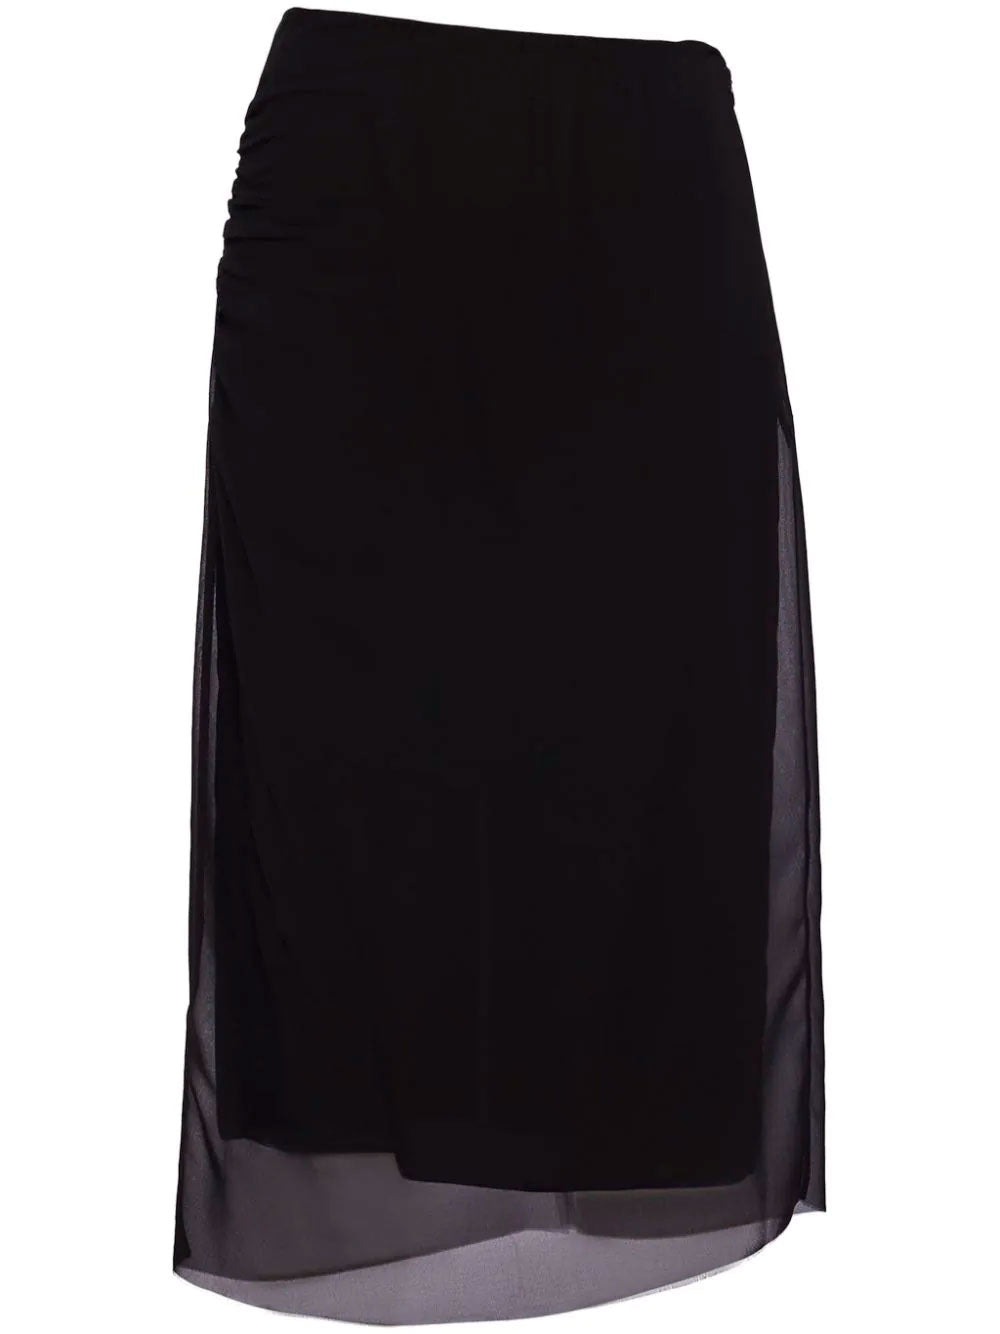 Semi-sheer skirt